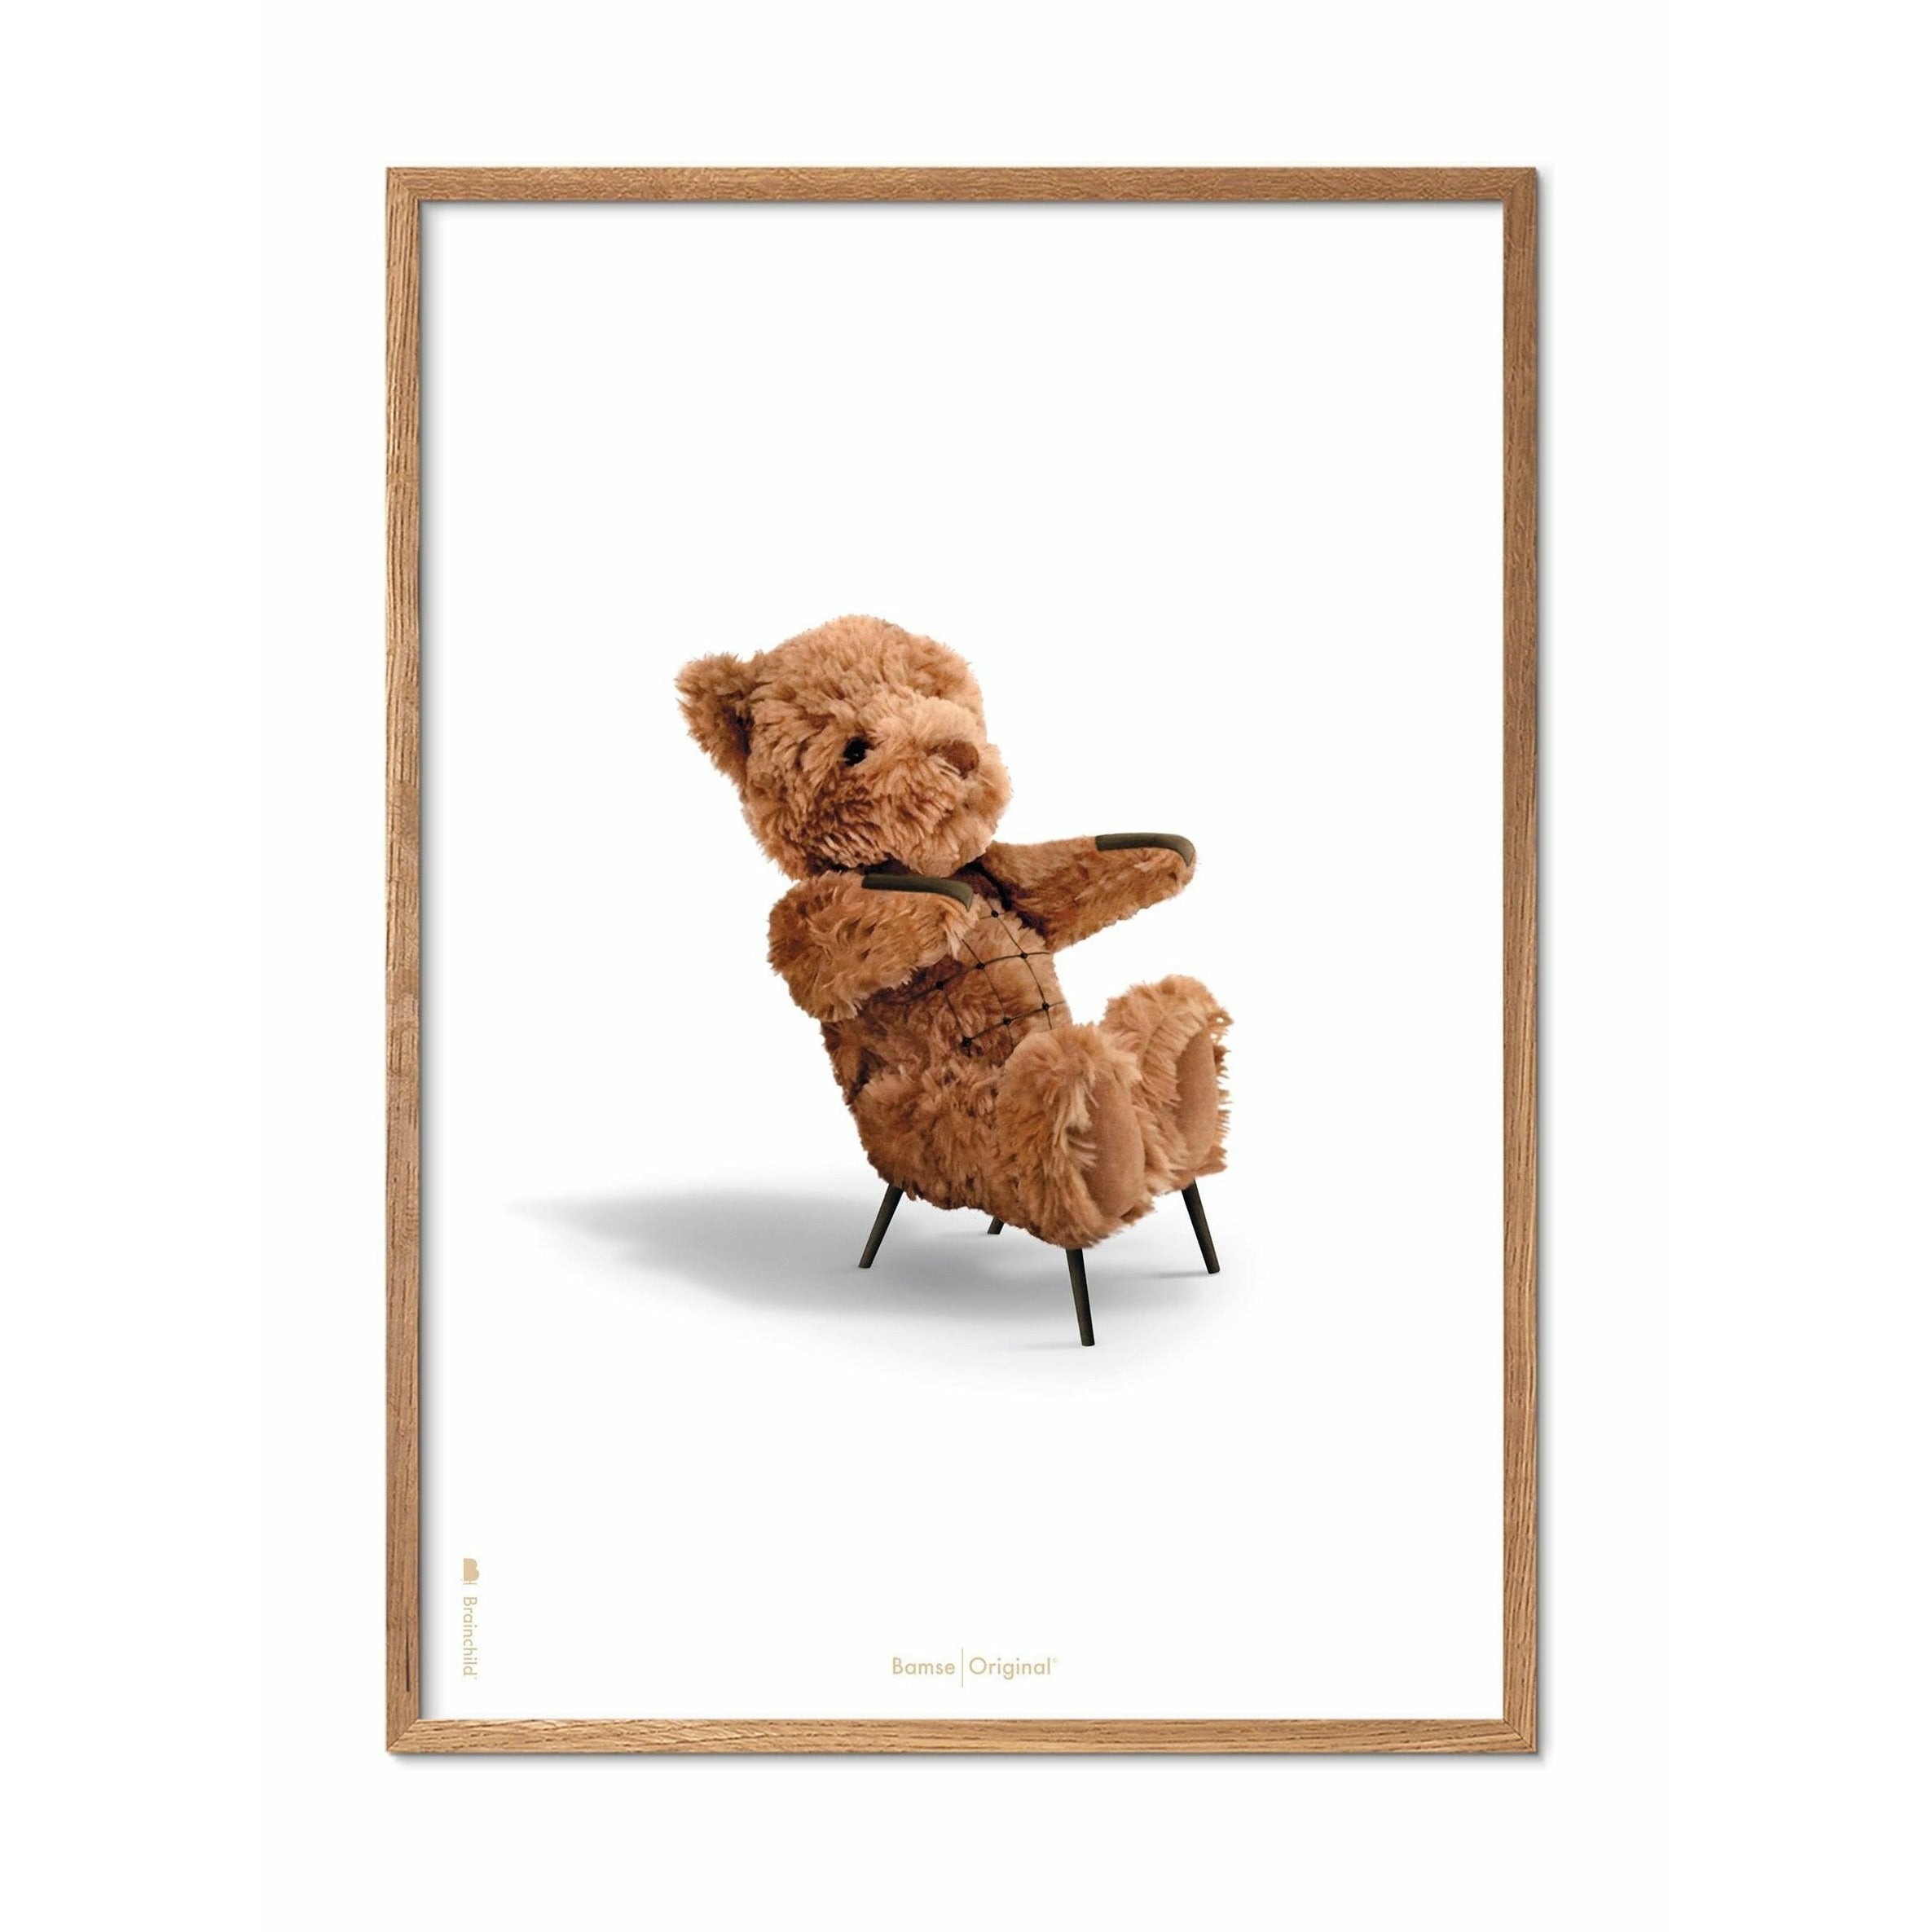 Brainchild Teddy Bear Classic Poster, Frame Made Of Light Wood 30x40 Cm, White Background